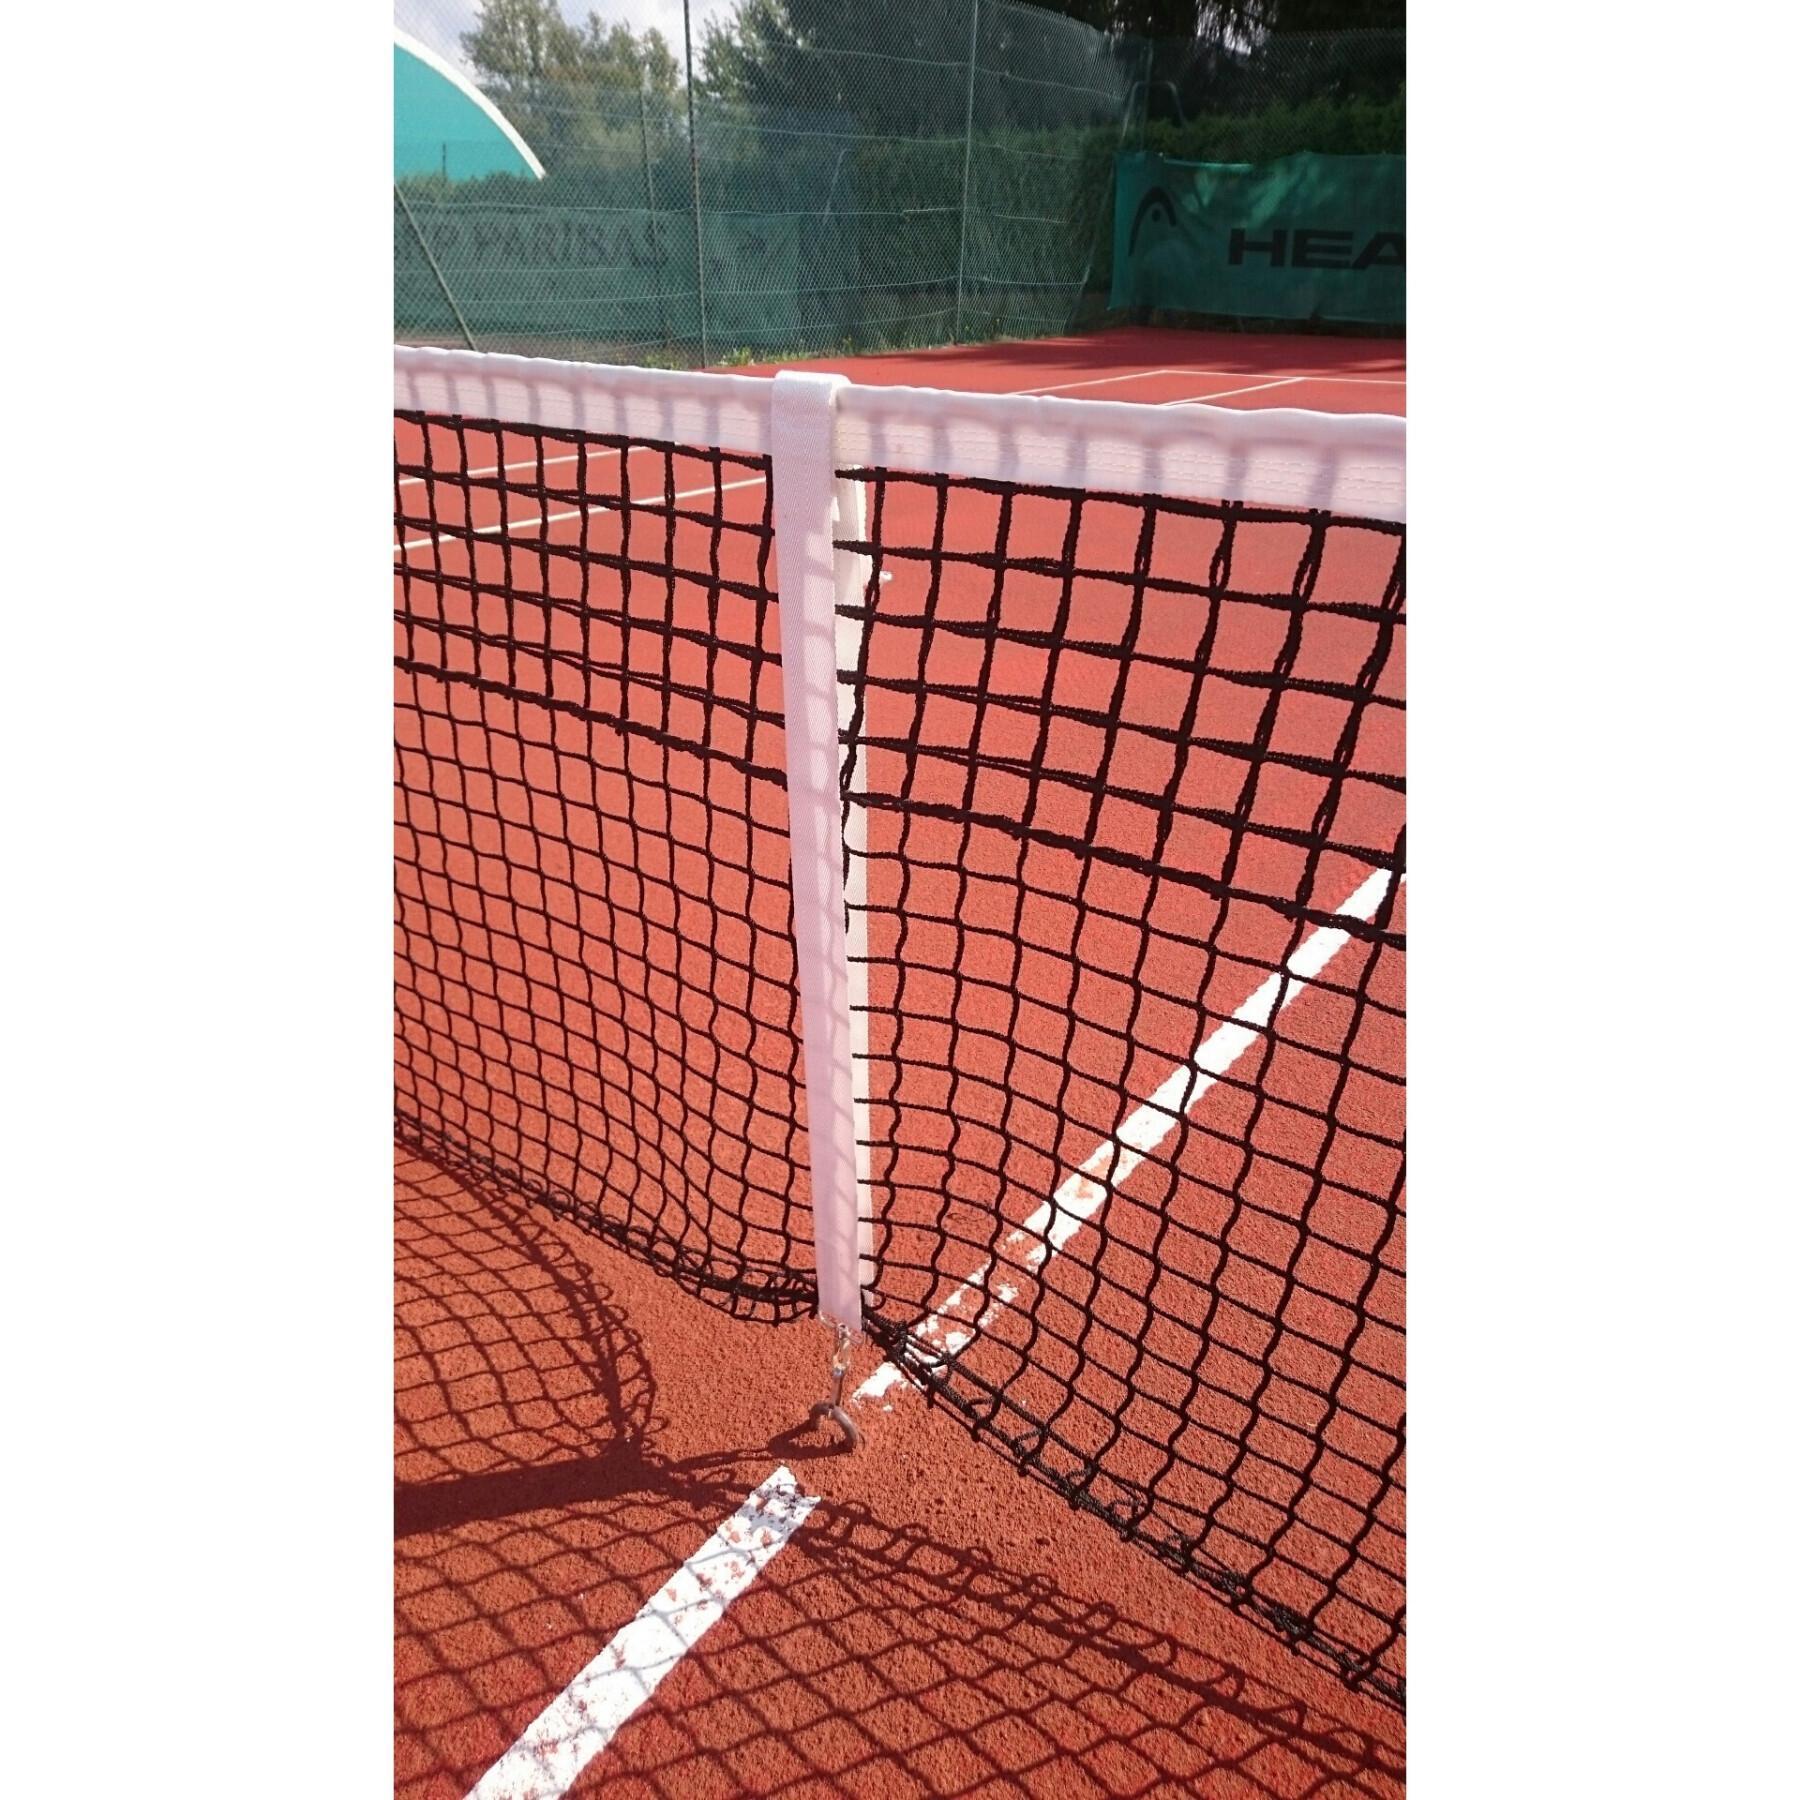 Velcro tennis net regulator Carrington